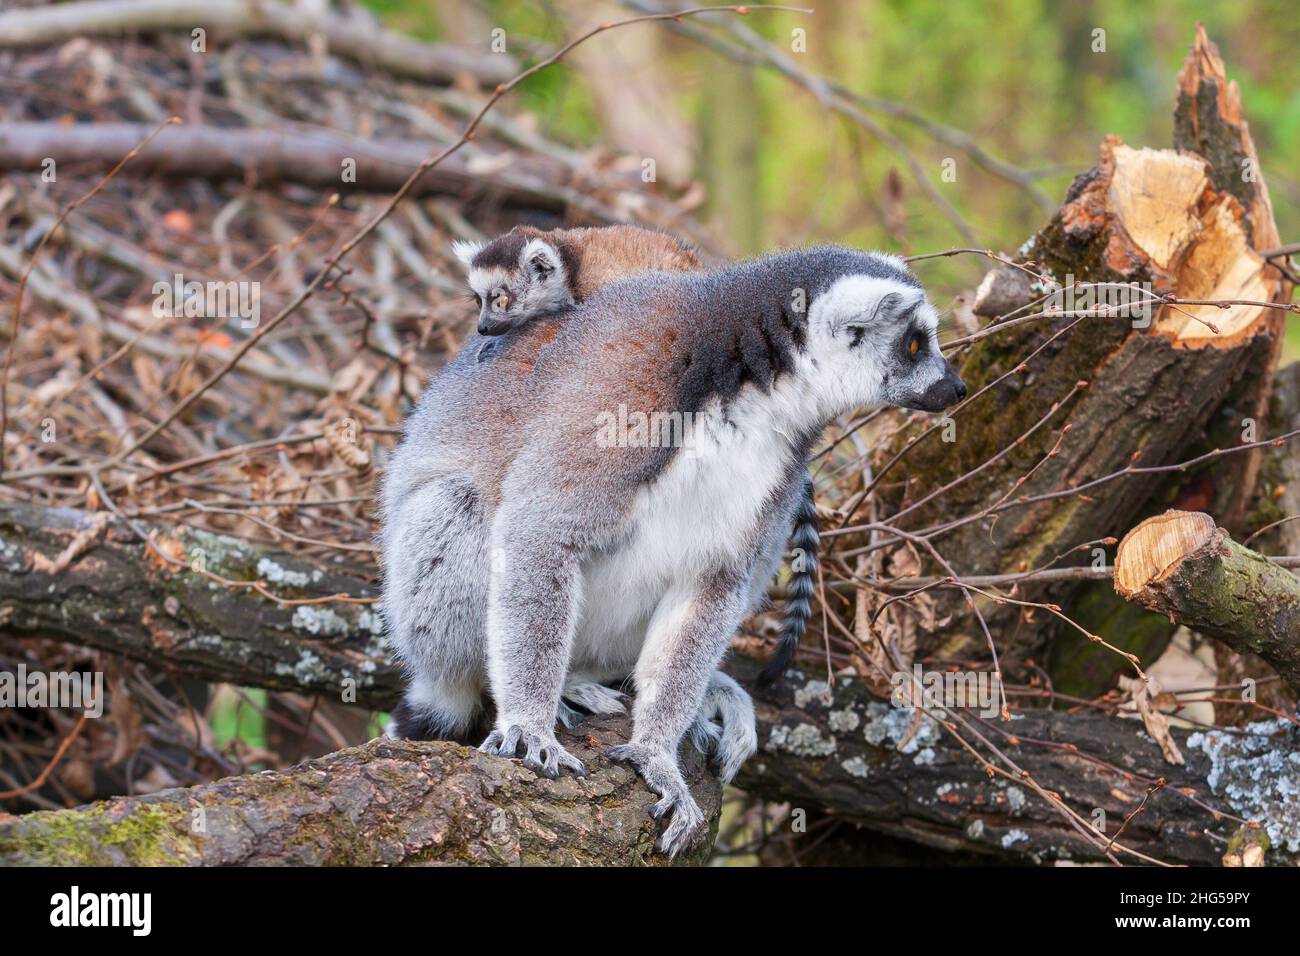 Portrait of Lemuriformes - Lemur in the park, which has on its back a small lemur cub. Stock Photo